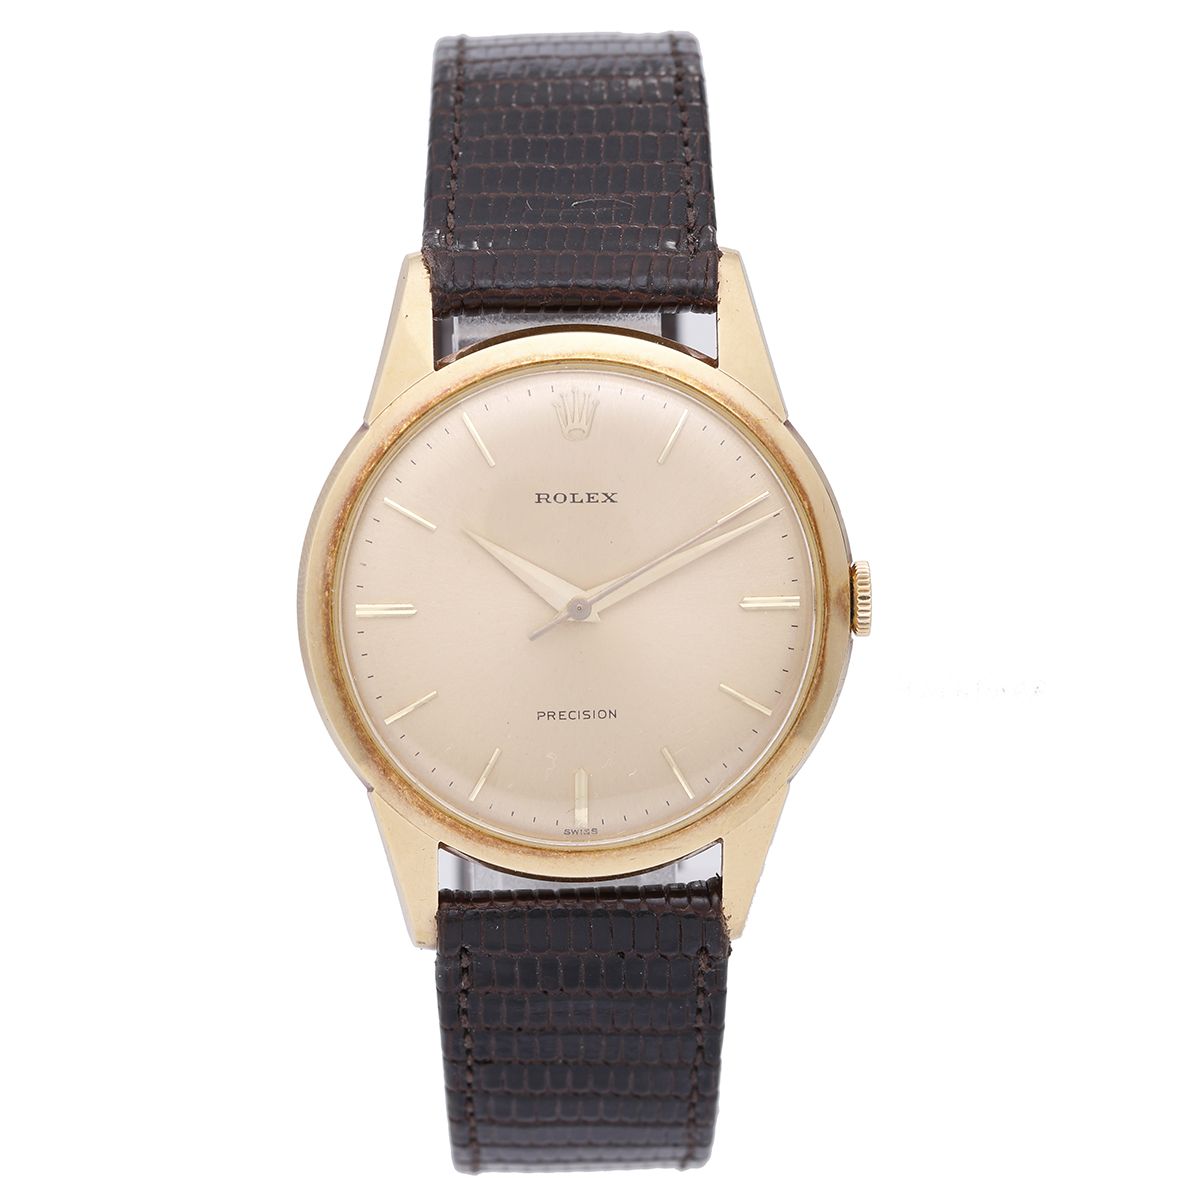 Vintage Rolex Precision Yellow Gold Men's Watch